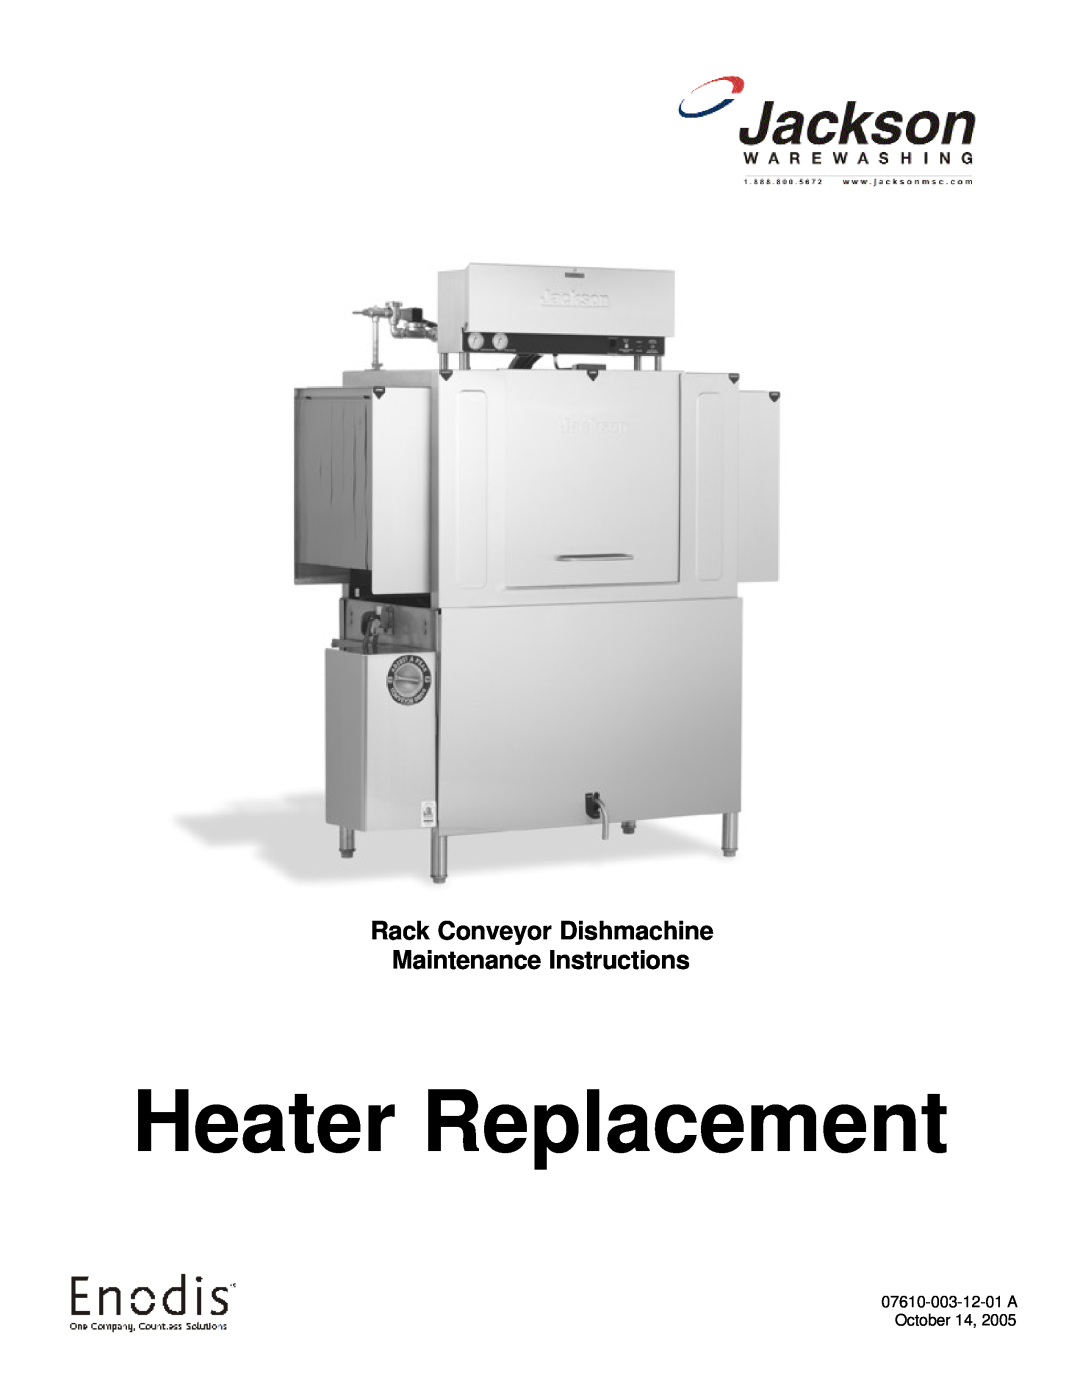 Jackson 440 3 15 06401-003-10-29 manual Heater Replacement, Rack Conveyor Dishmachine, Maintenance Instructions 